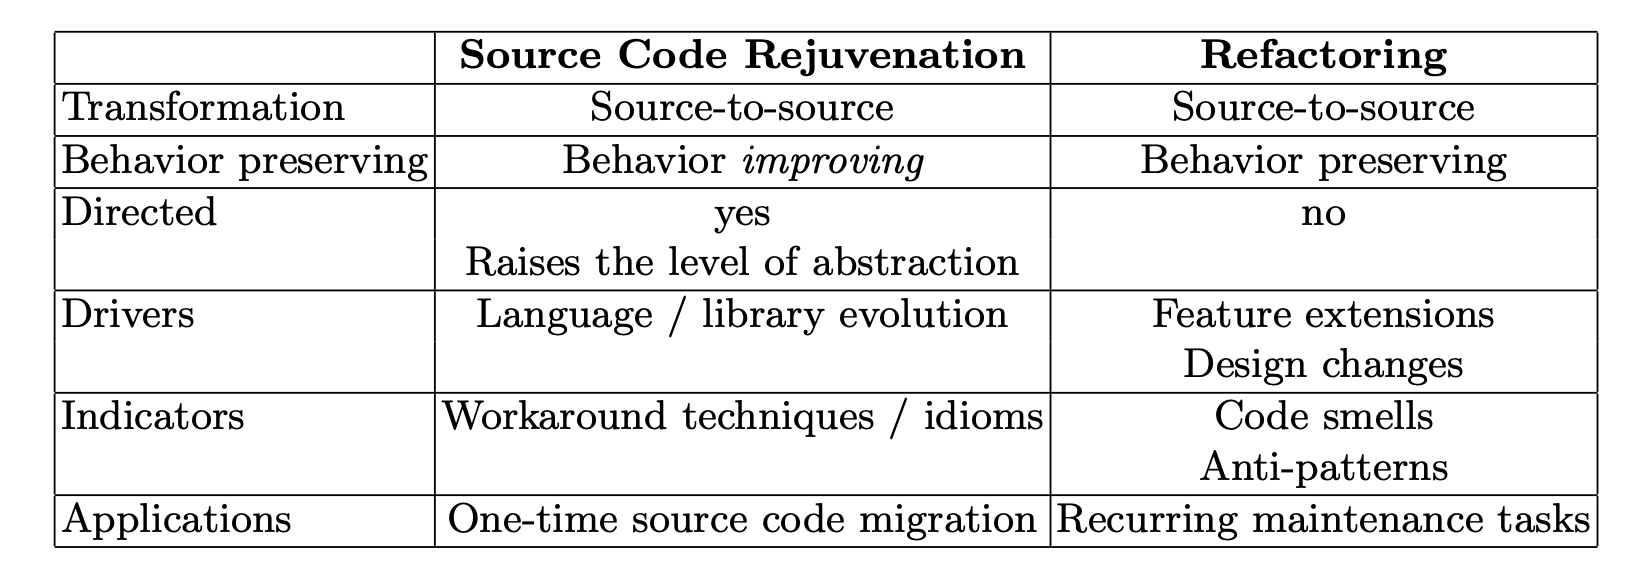 Source Code Rejuvenation vs. Refactoring